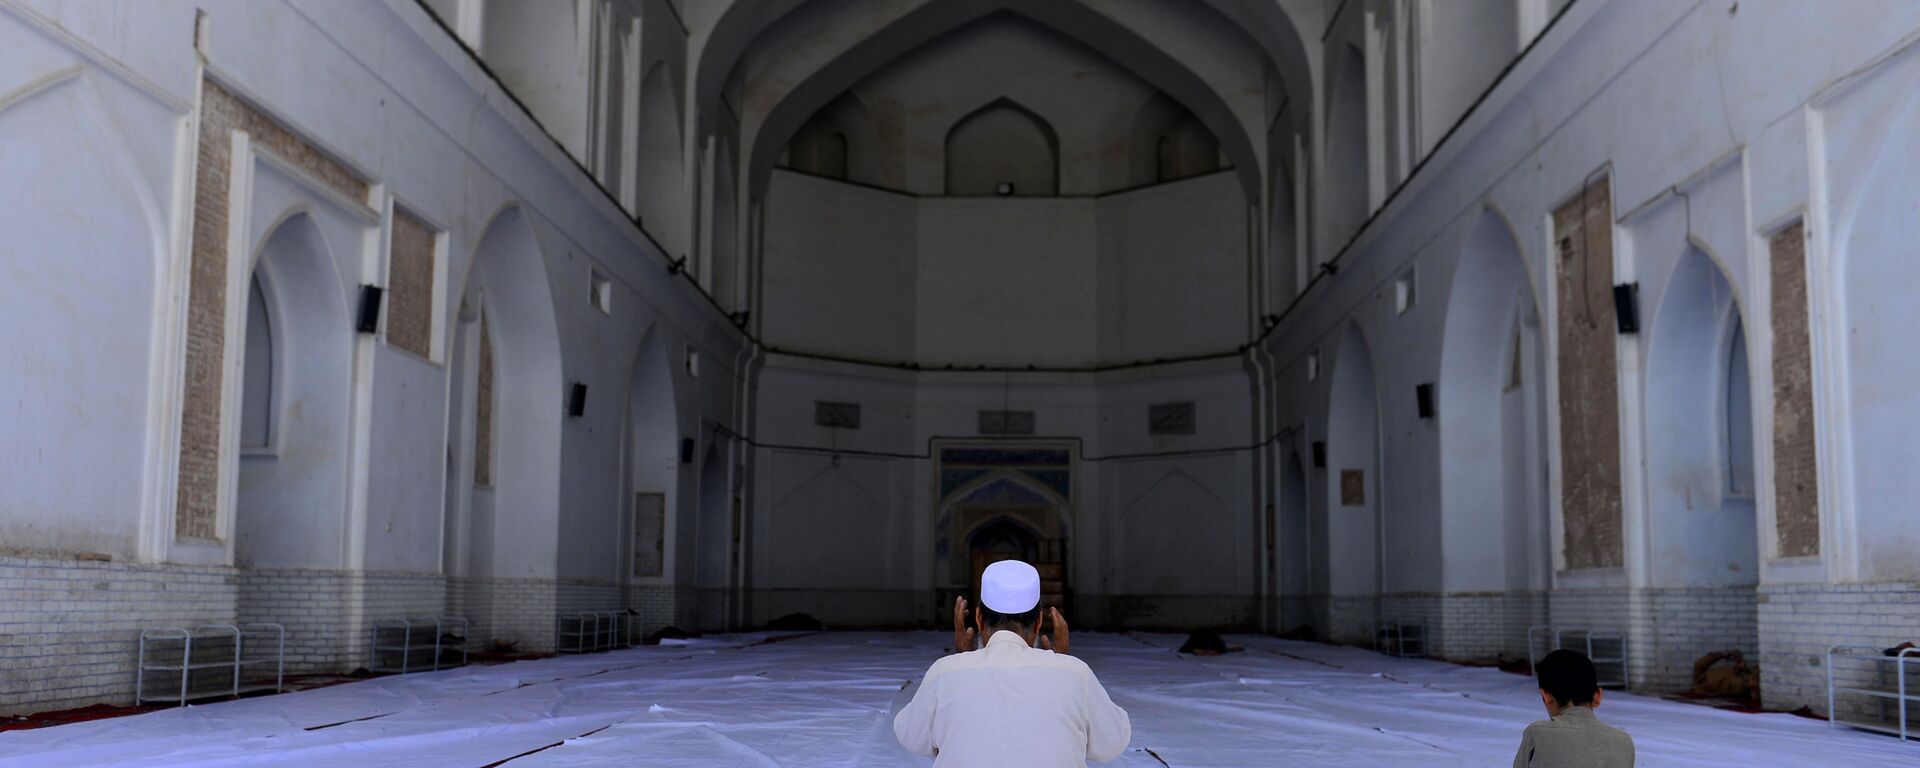 مصلون في جامع هرات، شهر رمضان، أفغانستان 26  أبريل 2020 - سبوتنيك عربي, 1920, 02.04.2022